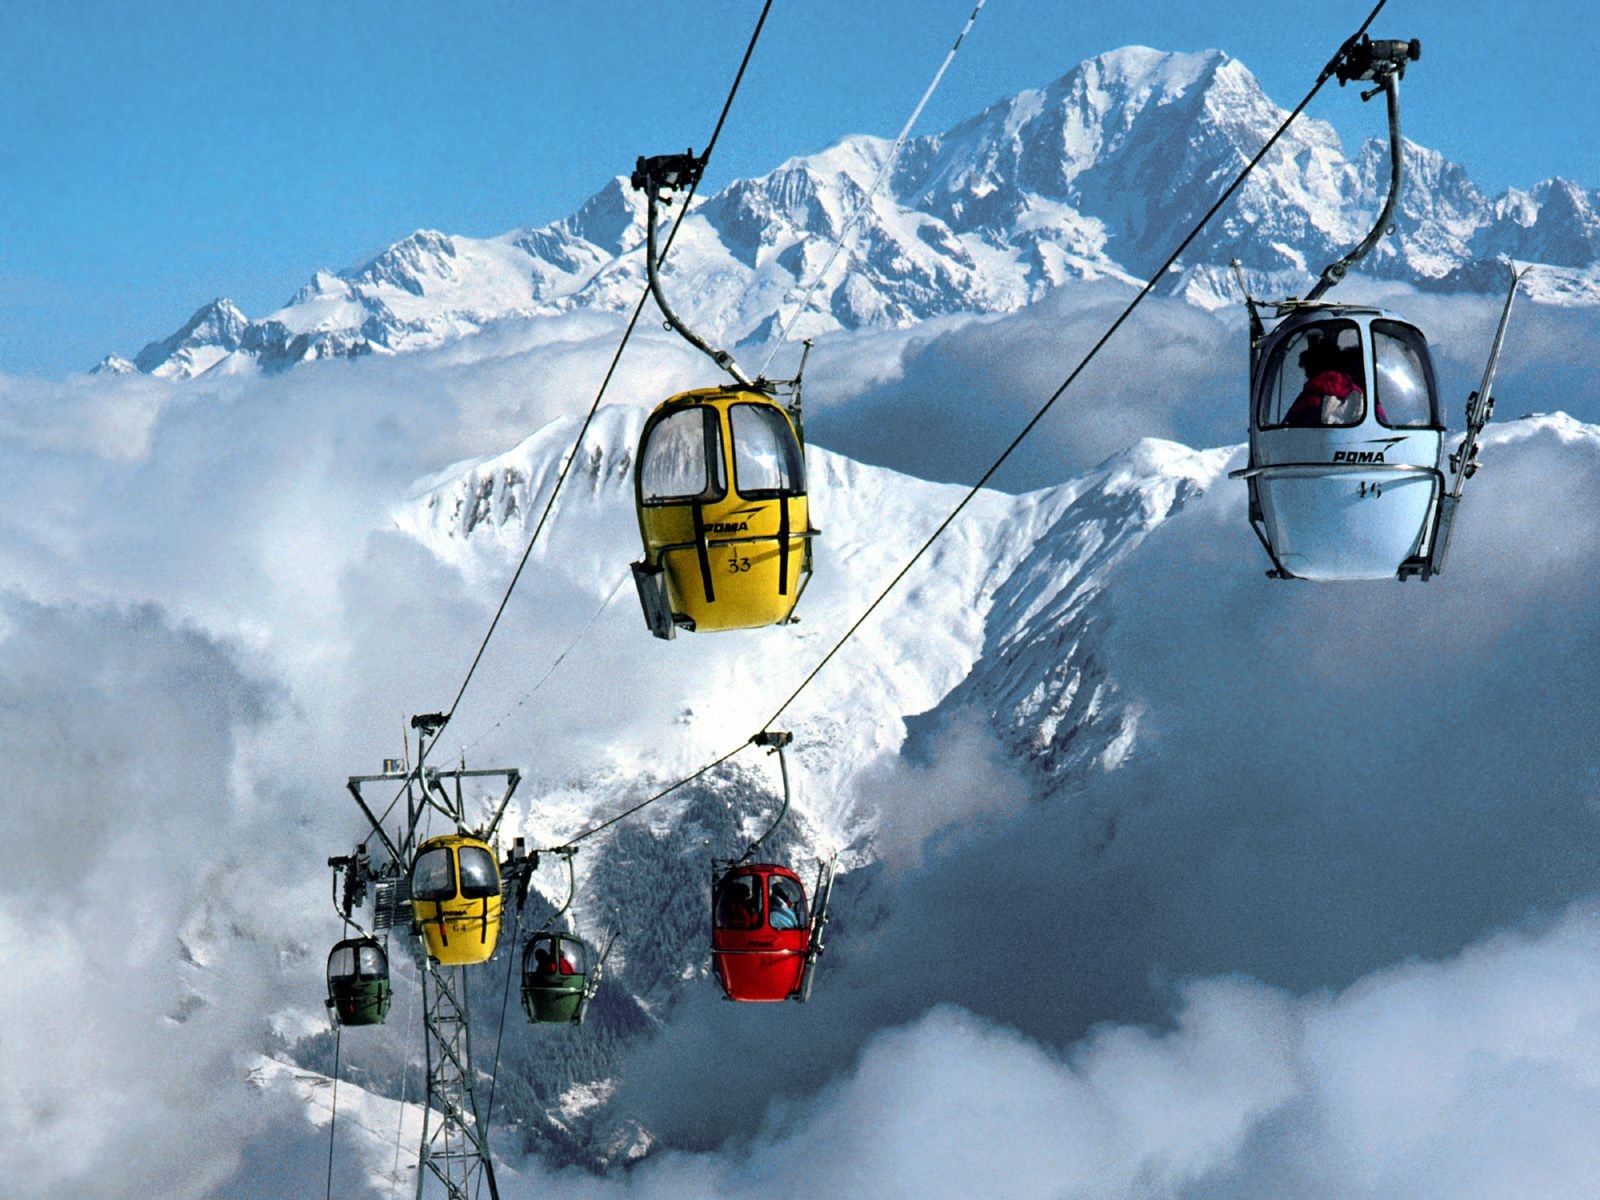 General 1600x1200 mountains snow clouds ski lift